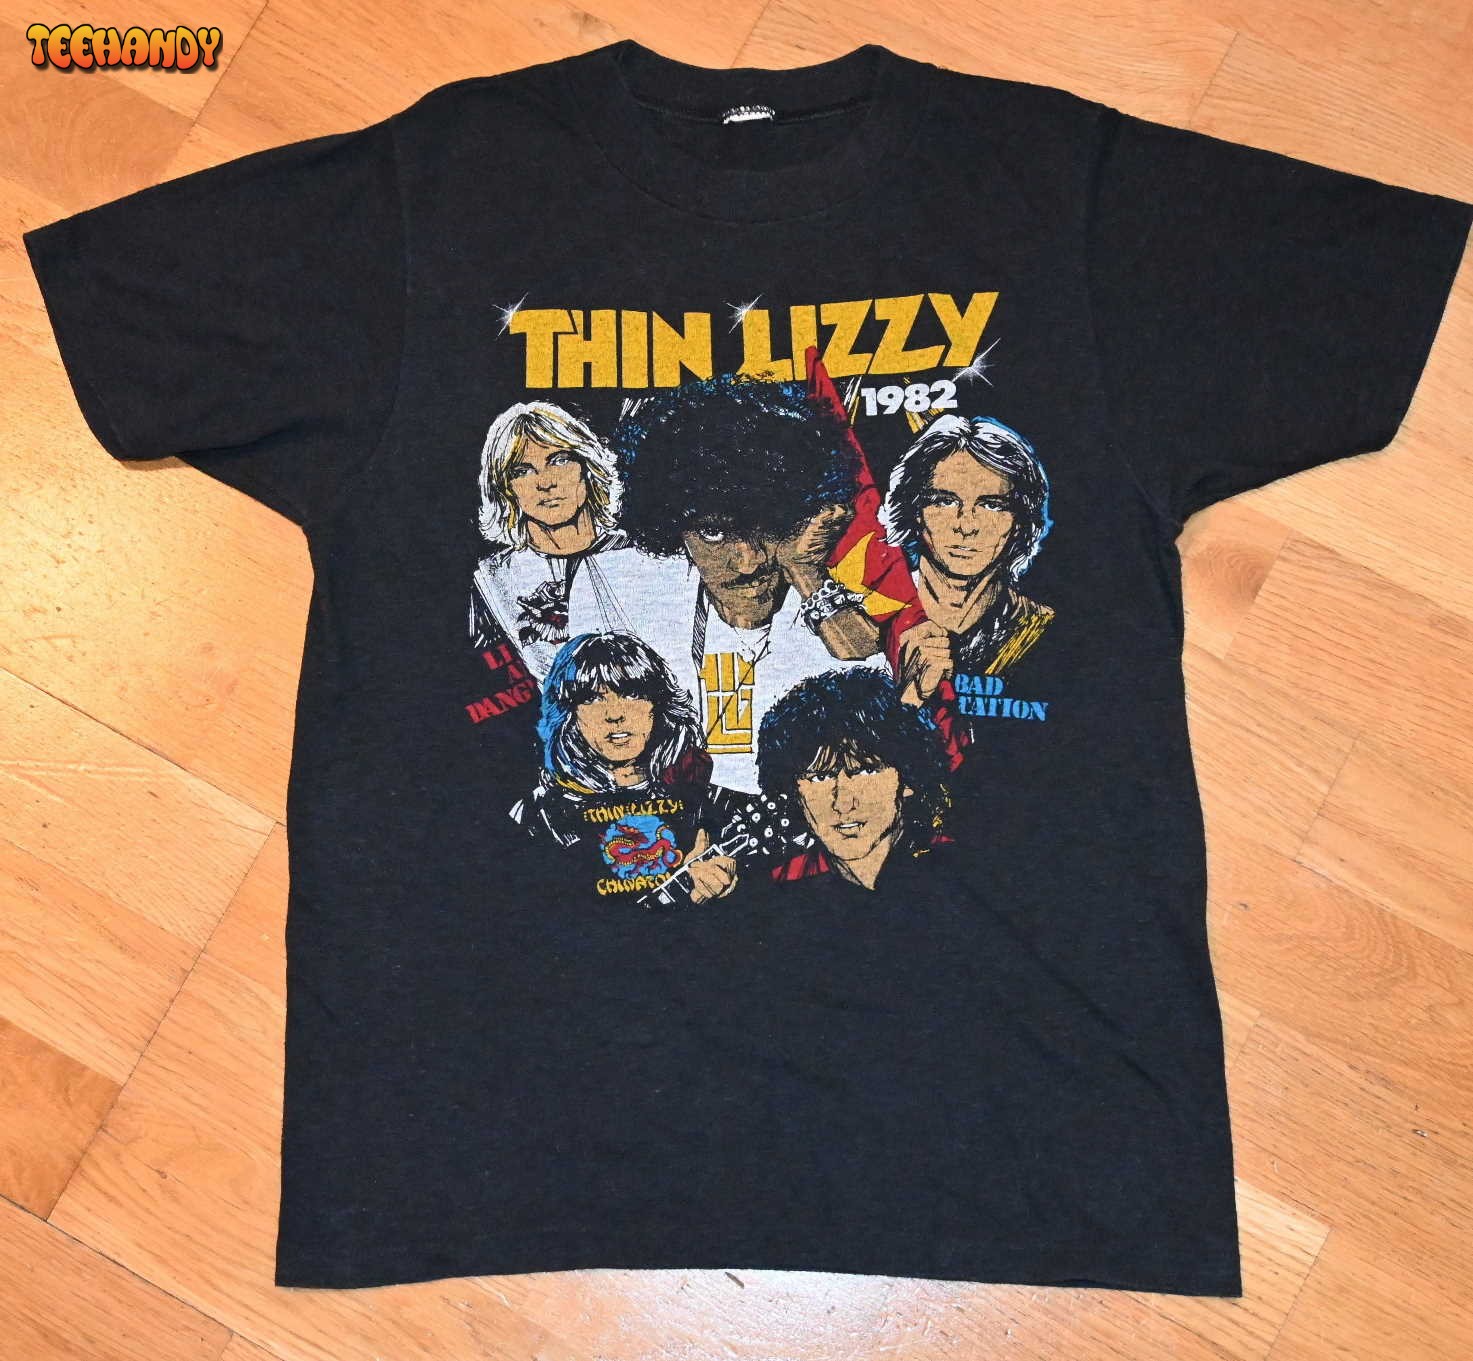 1982 THIN LIZZY vintage rare original 82 UK Tour concert rock band T Shirt